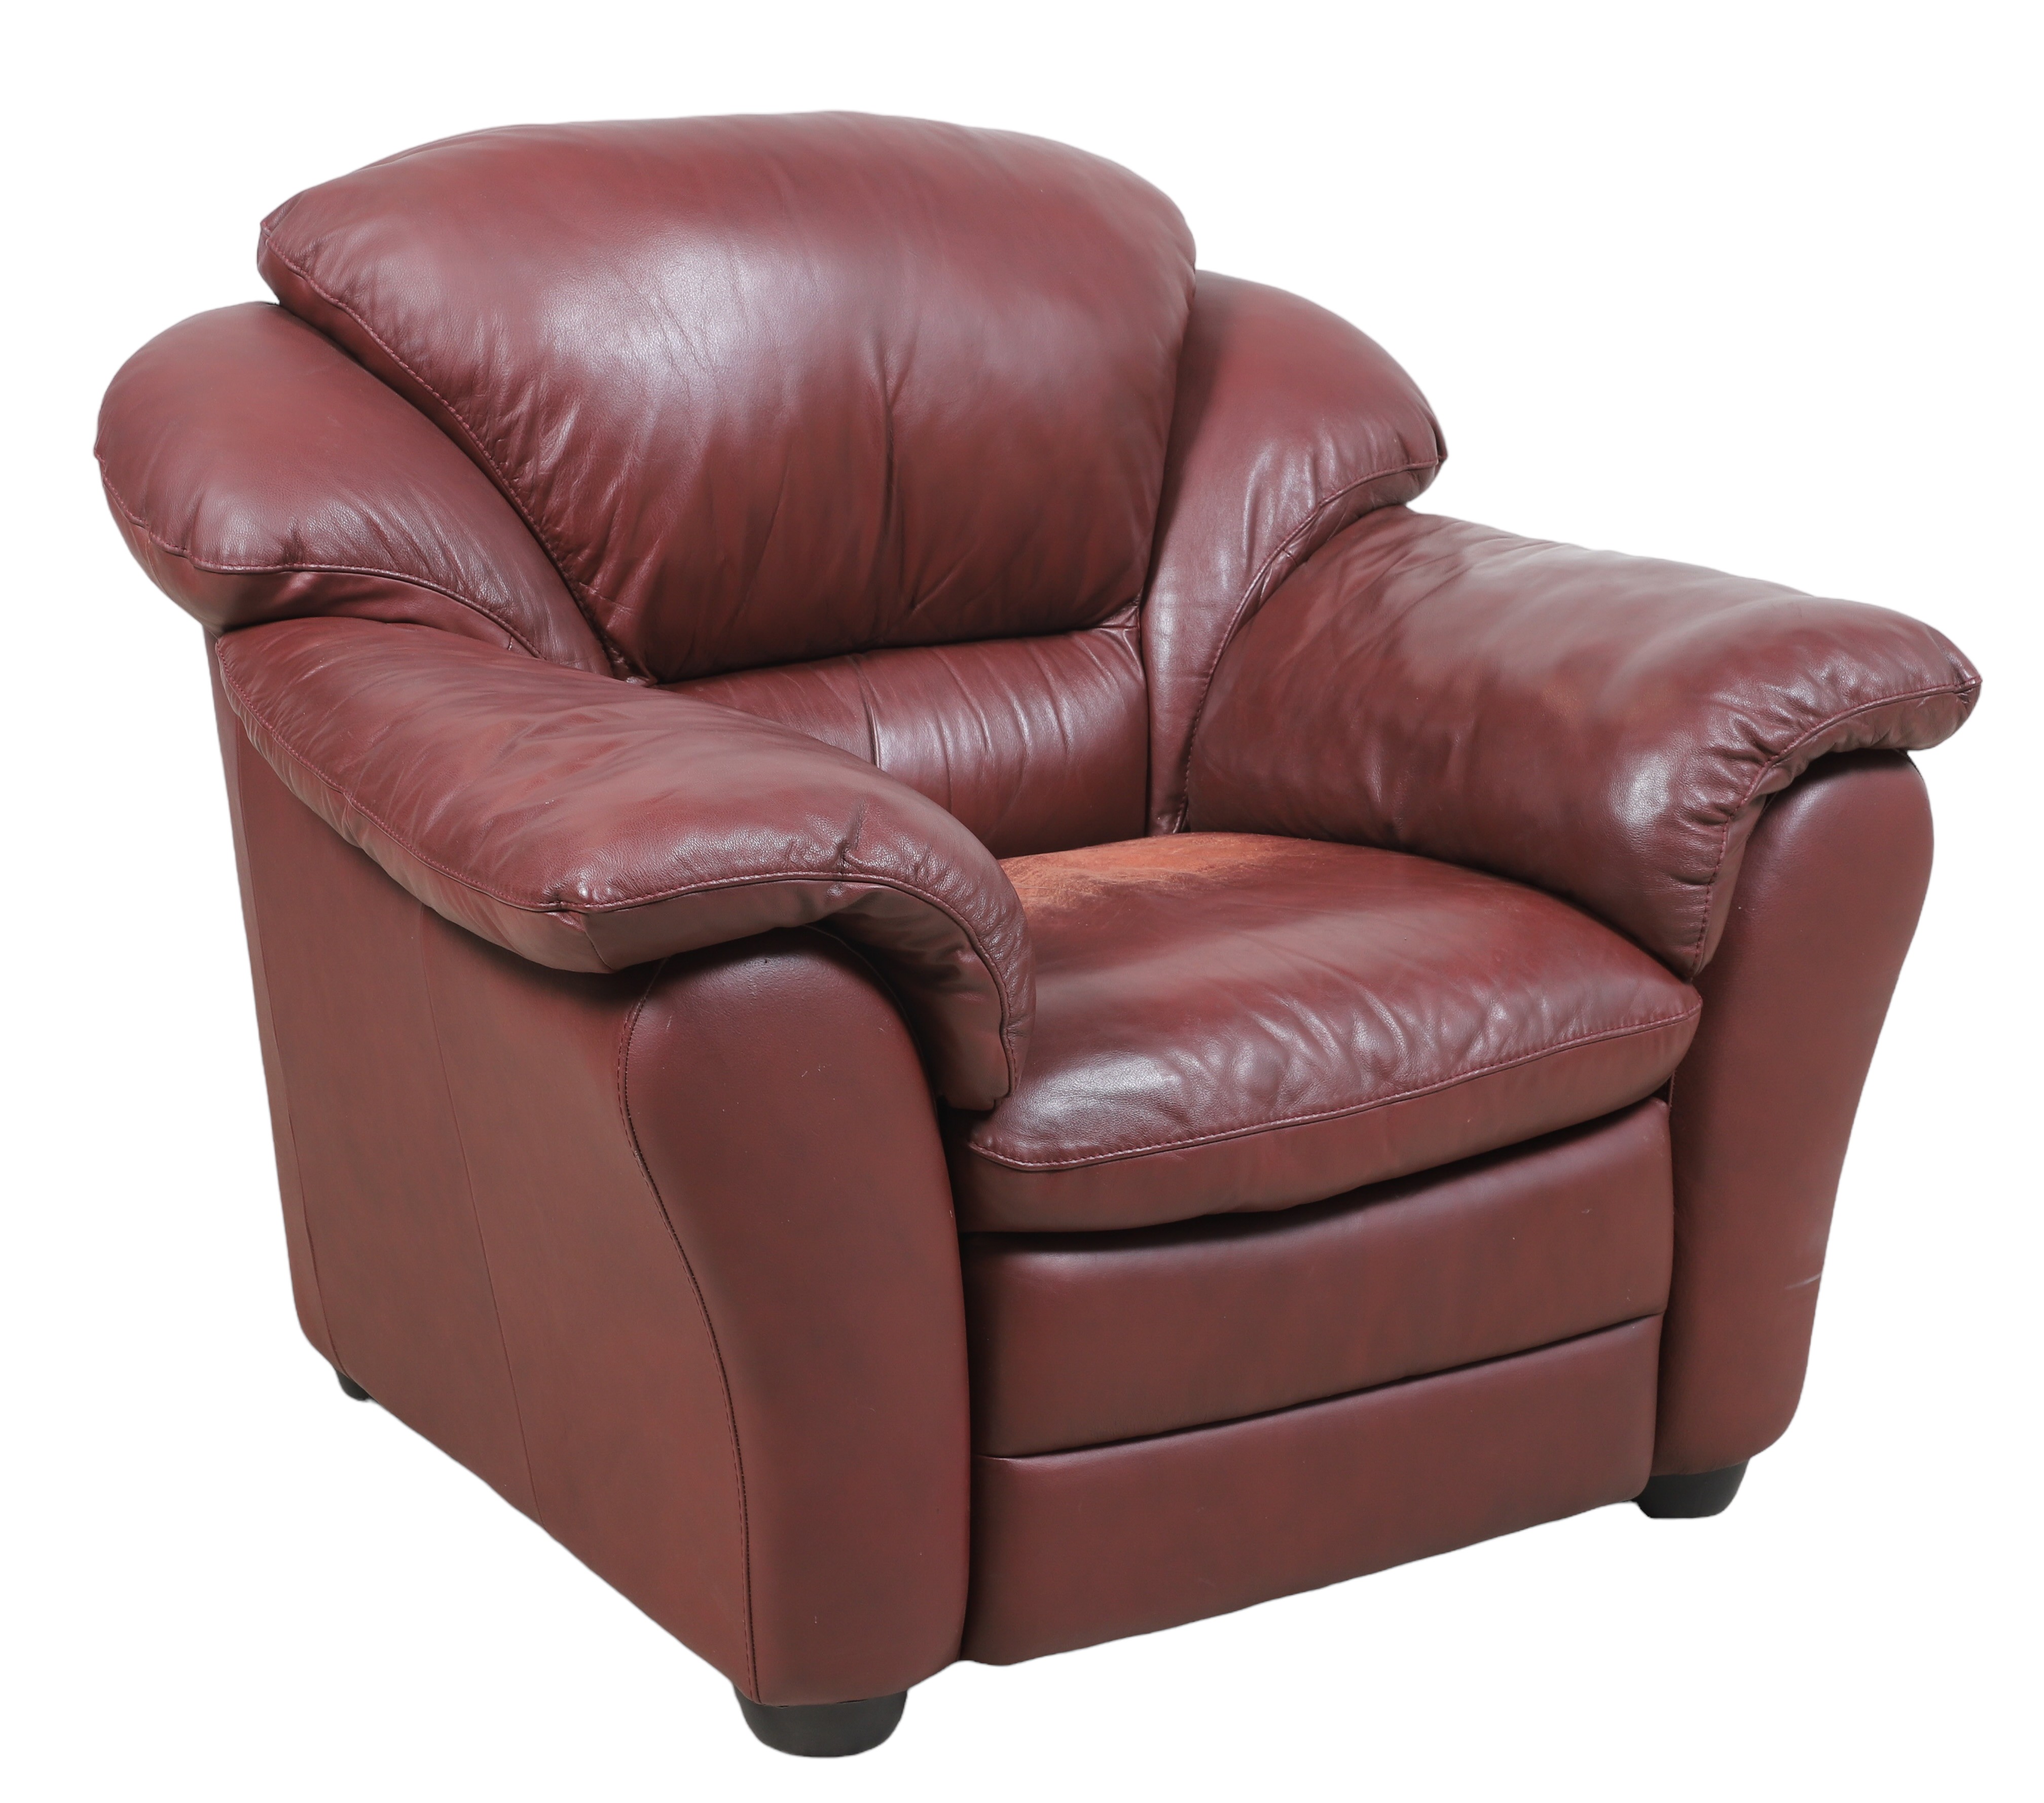 Italsofa Contemporary leather lounge 3c66e7